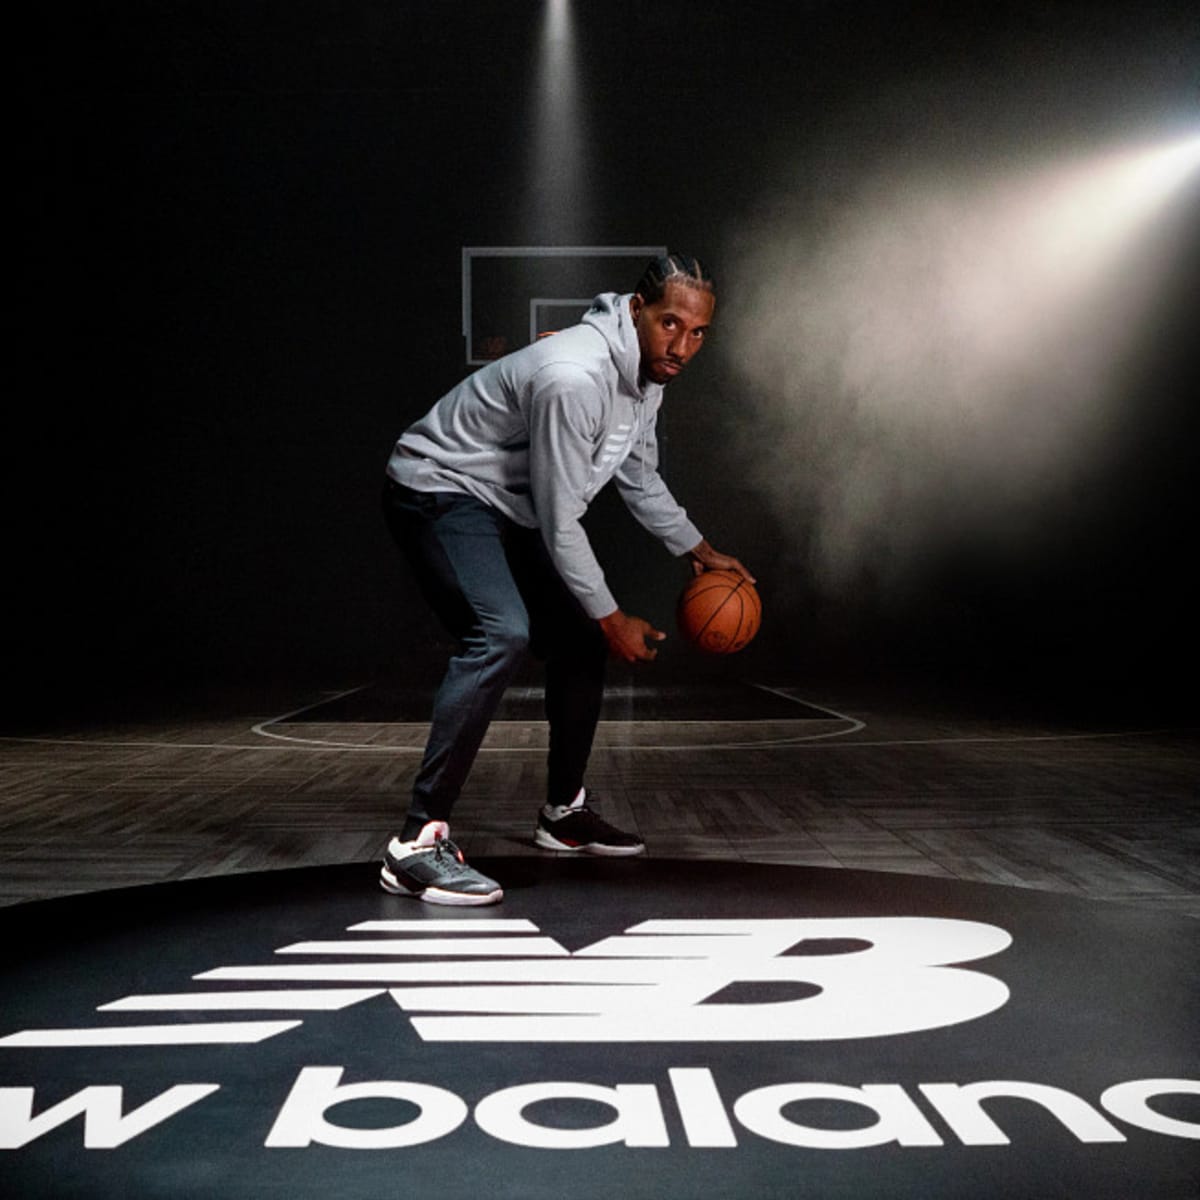 Kawhi Leonard New Ballance Basketball shoe - Energy Red